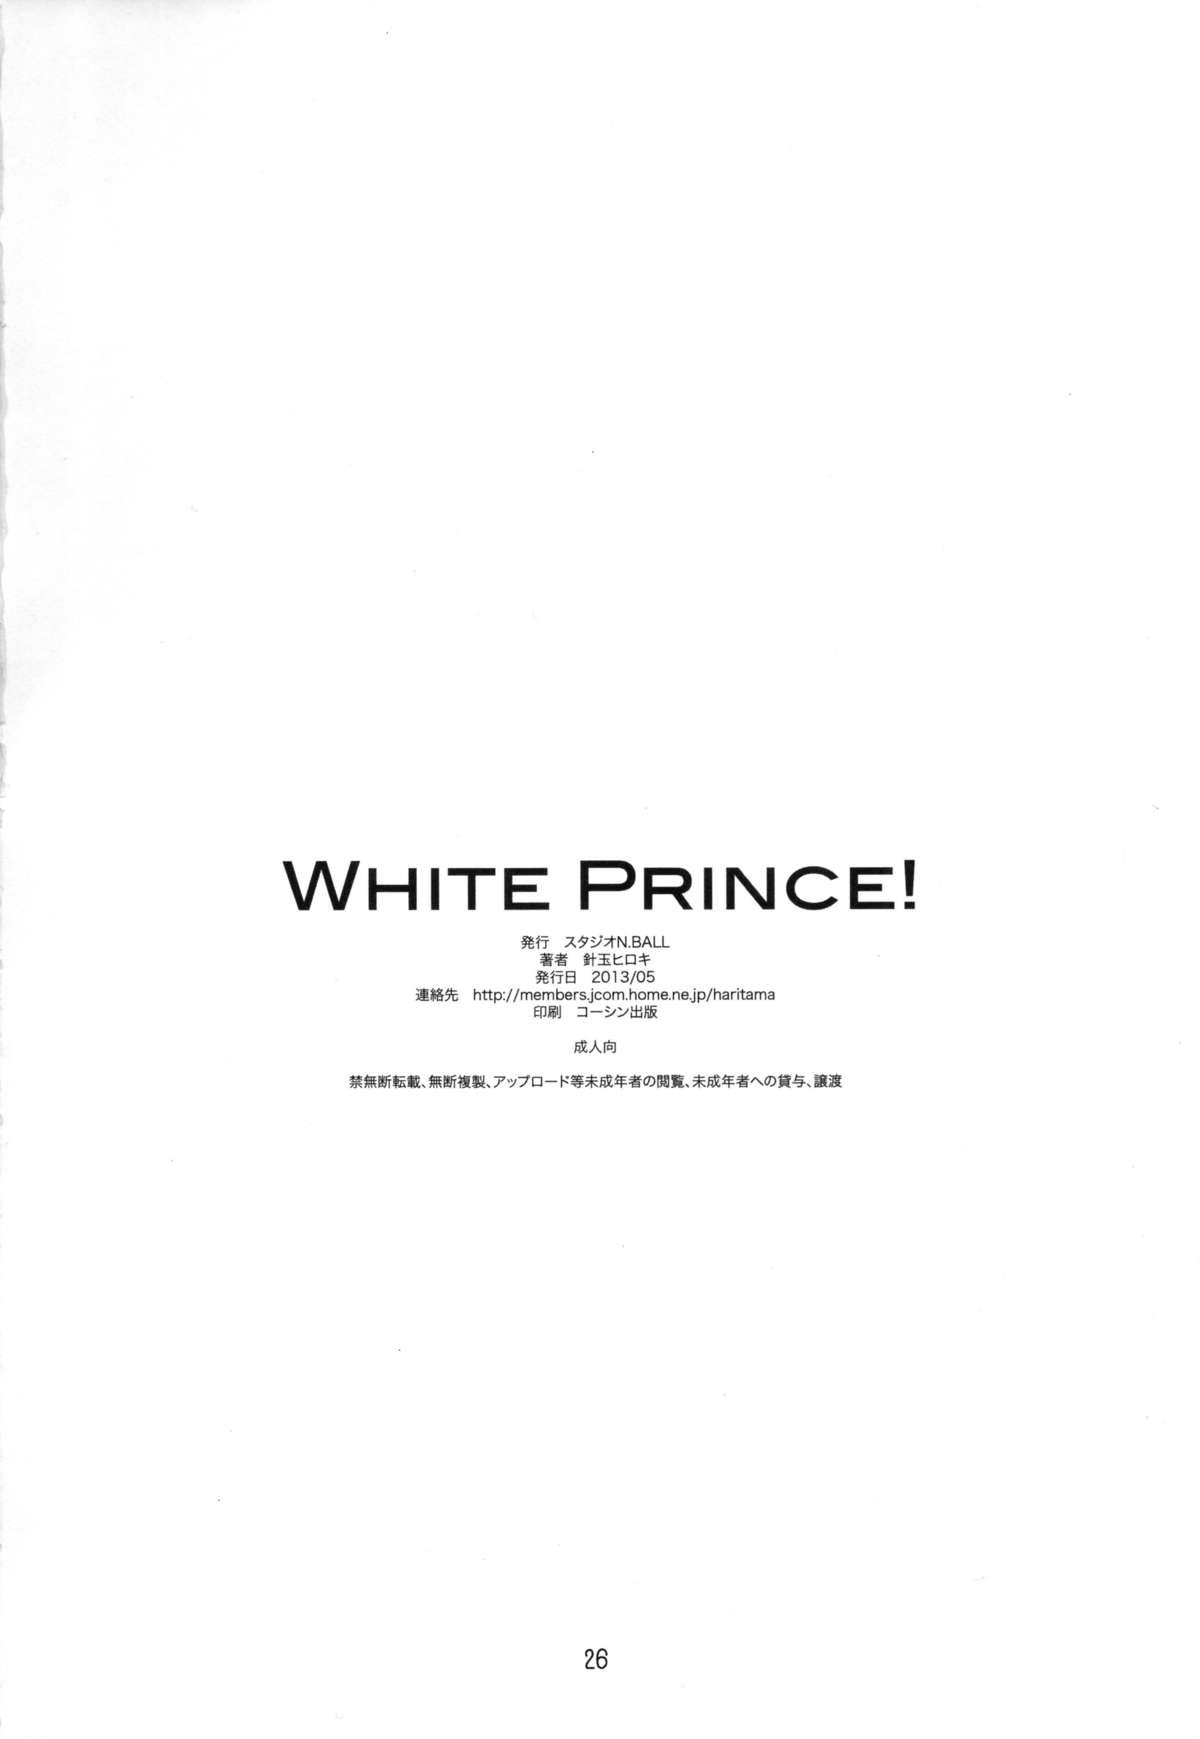 WHITE PRINCE! 25